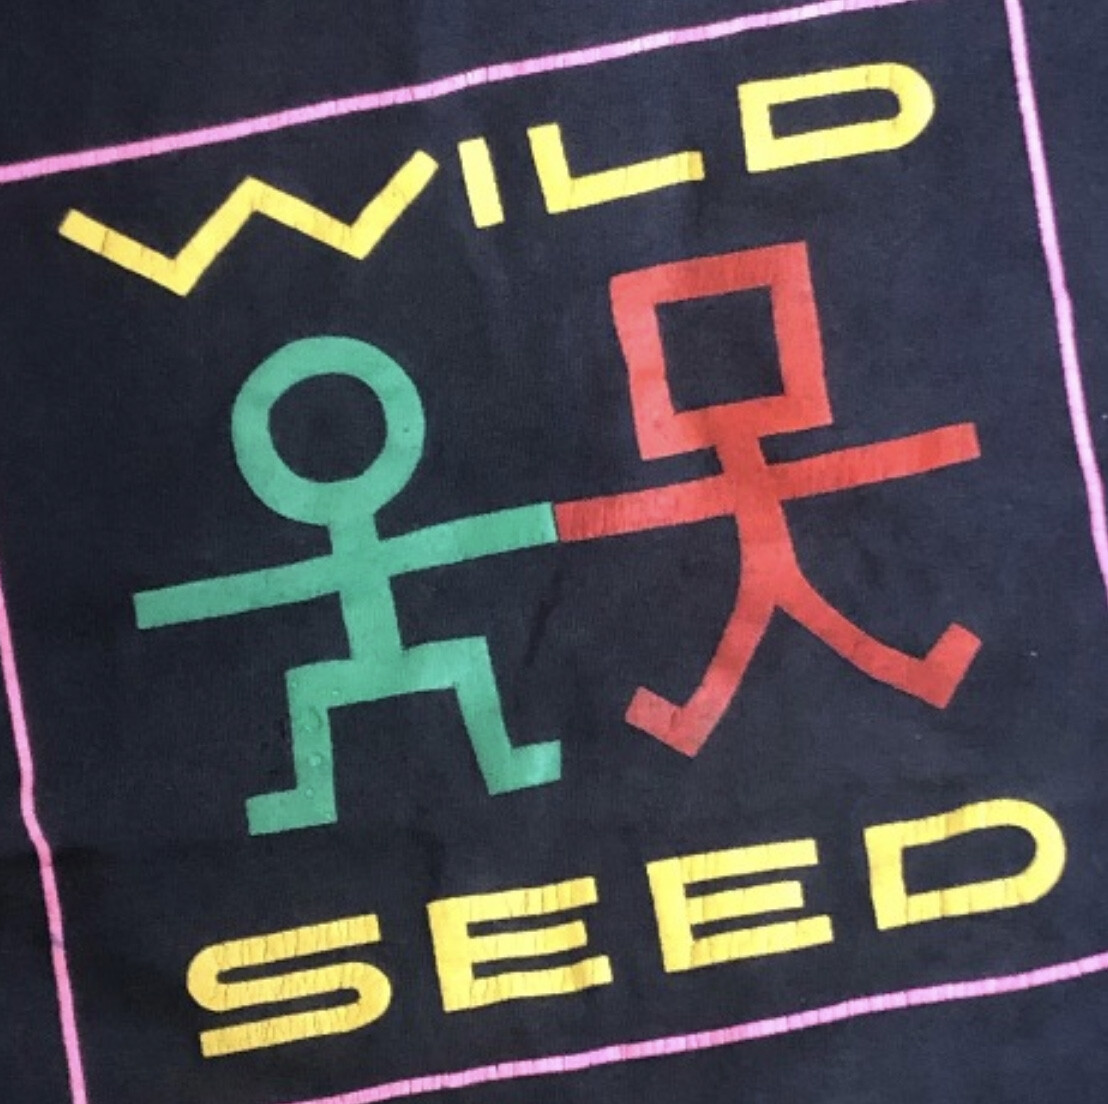 Wild Seed